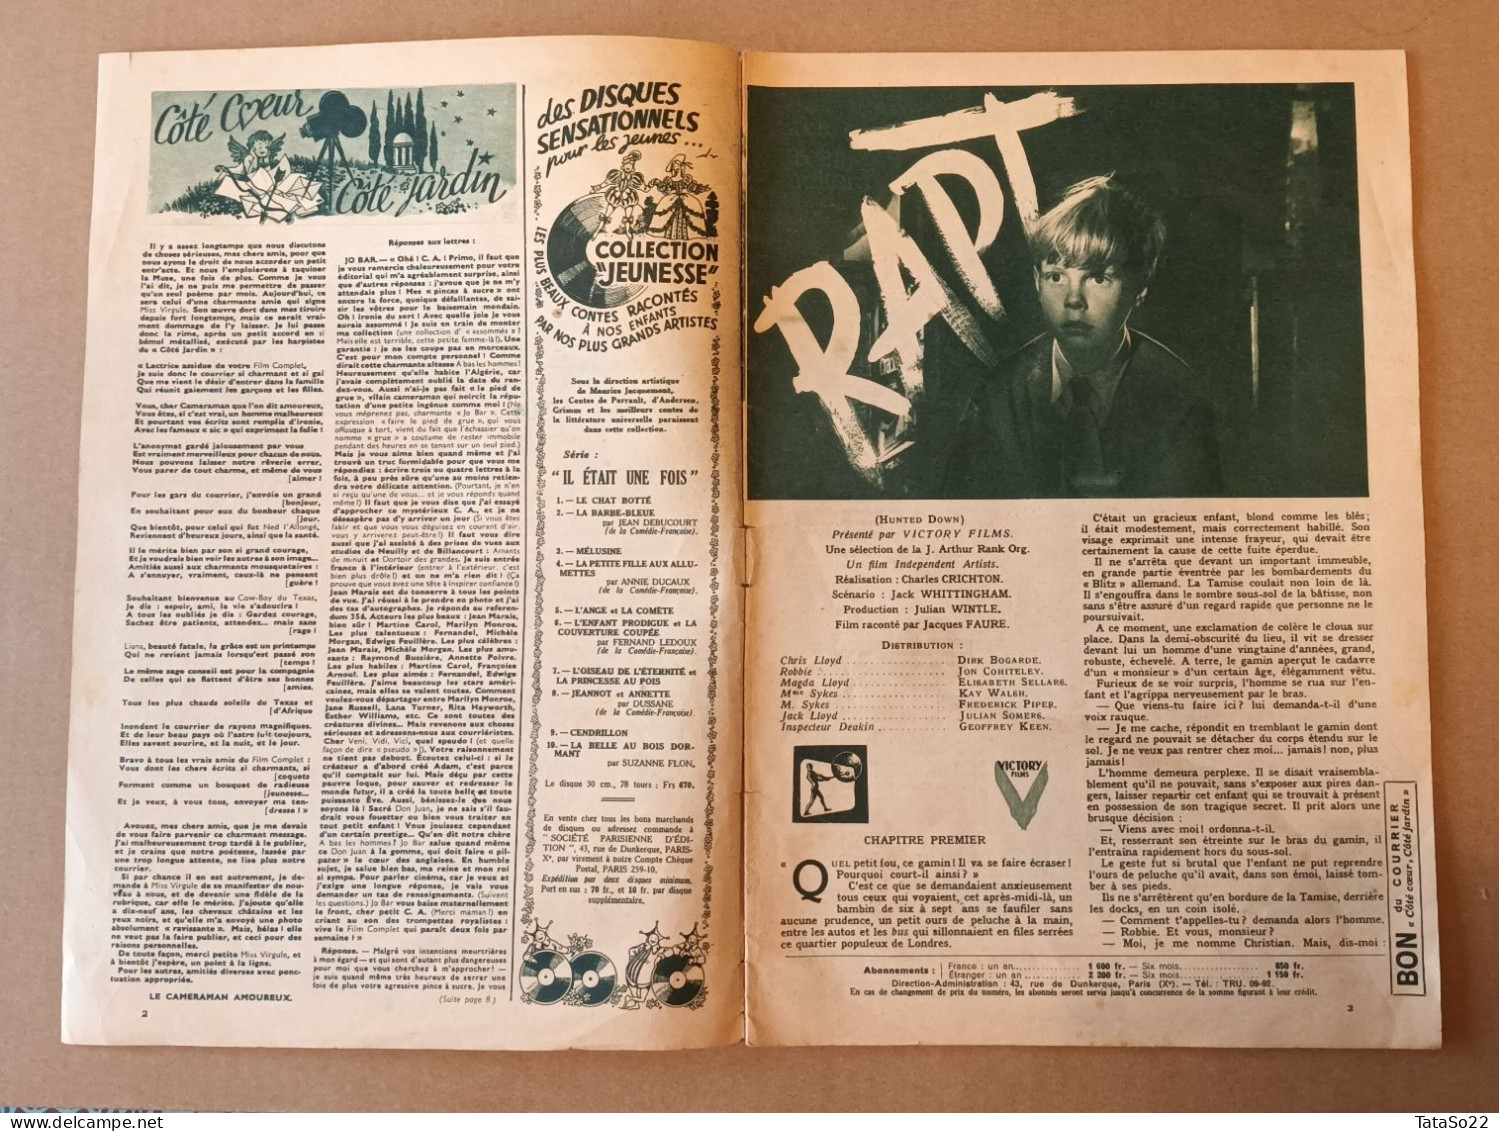 Film Complet - 16 Pages N° 385  Rapt - Cinema